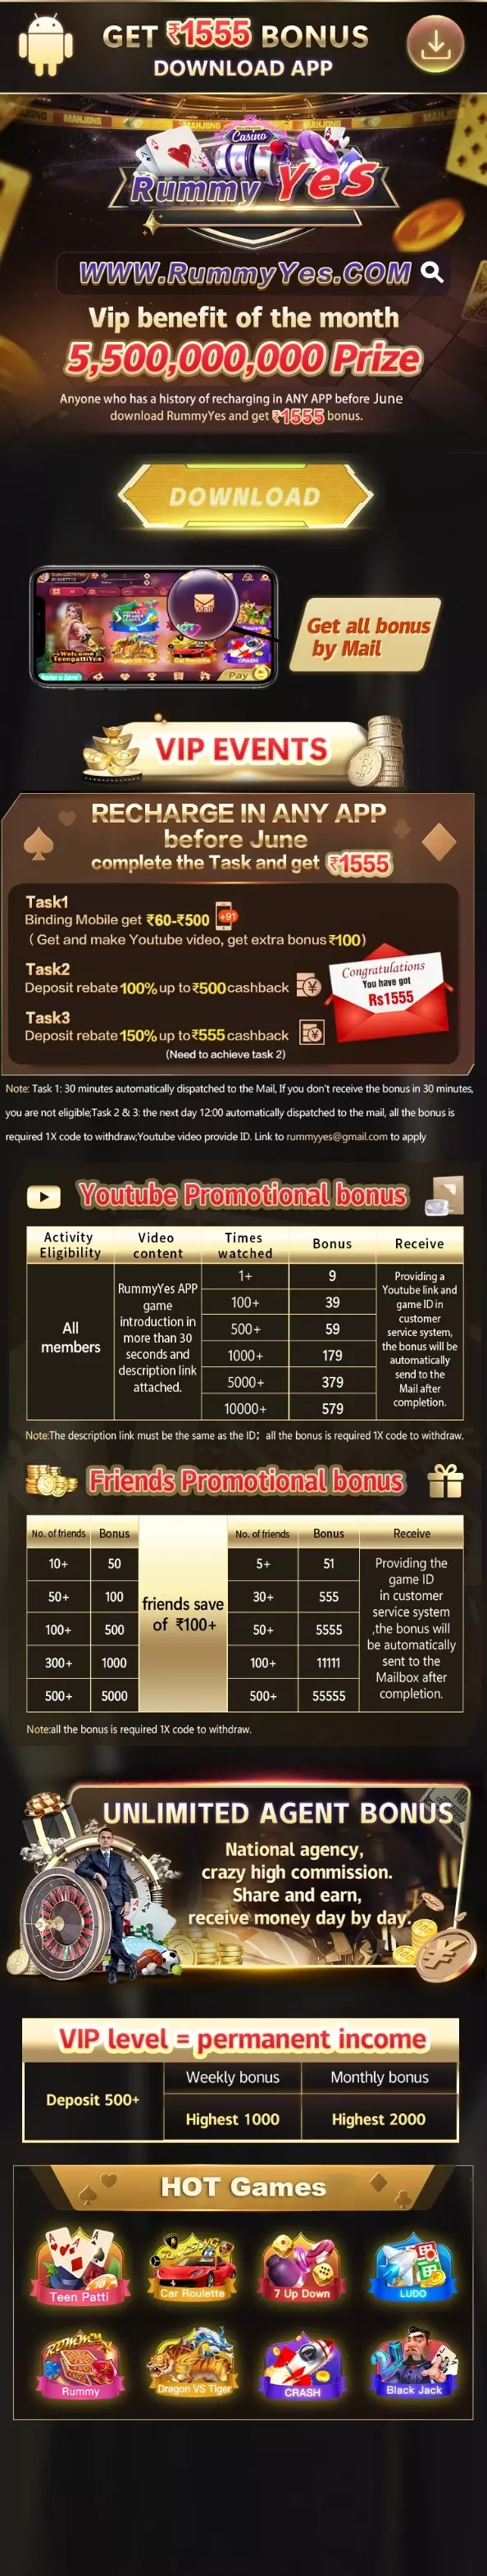 Rummy Yes App Download, Rummy APK Download & Get ₹51 Sign up Bonus | Per Invite Bonus ₹100 Real Cash, Rummy Yes Download